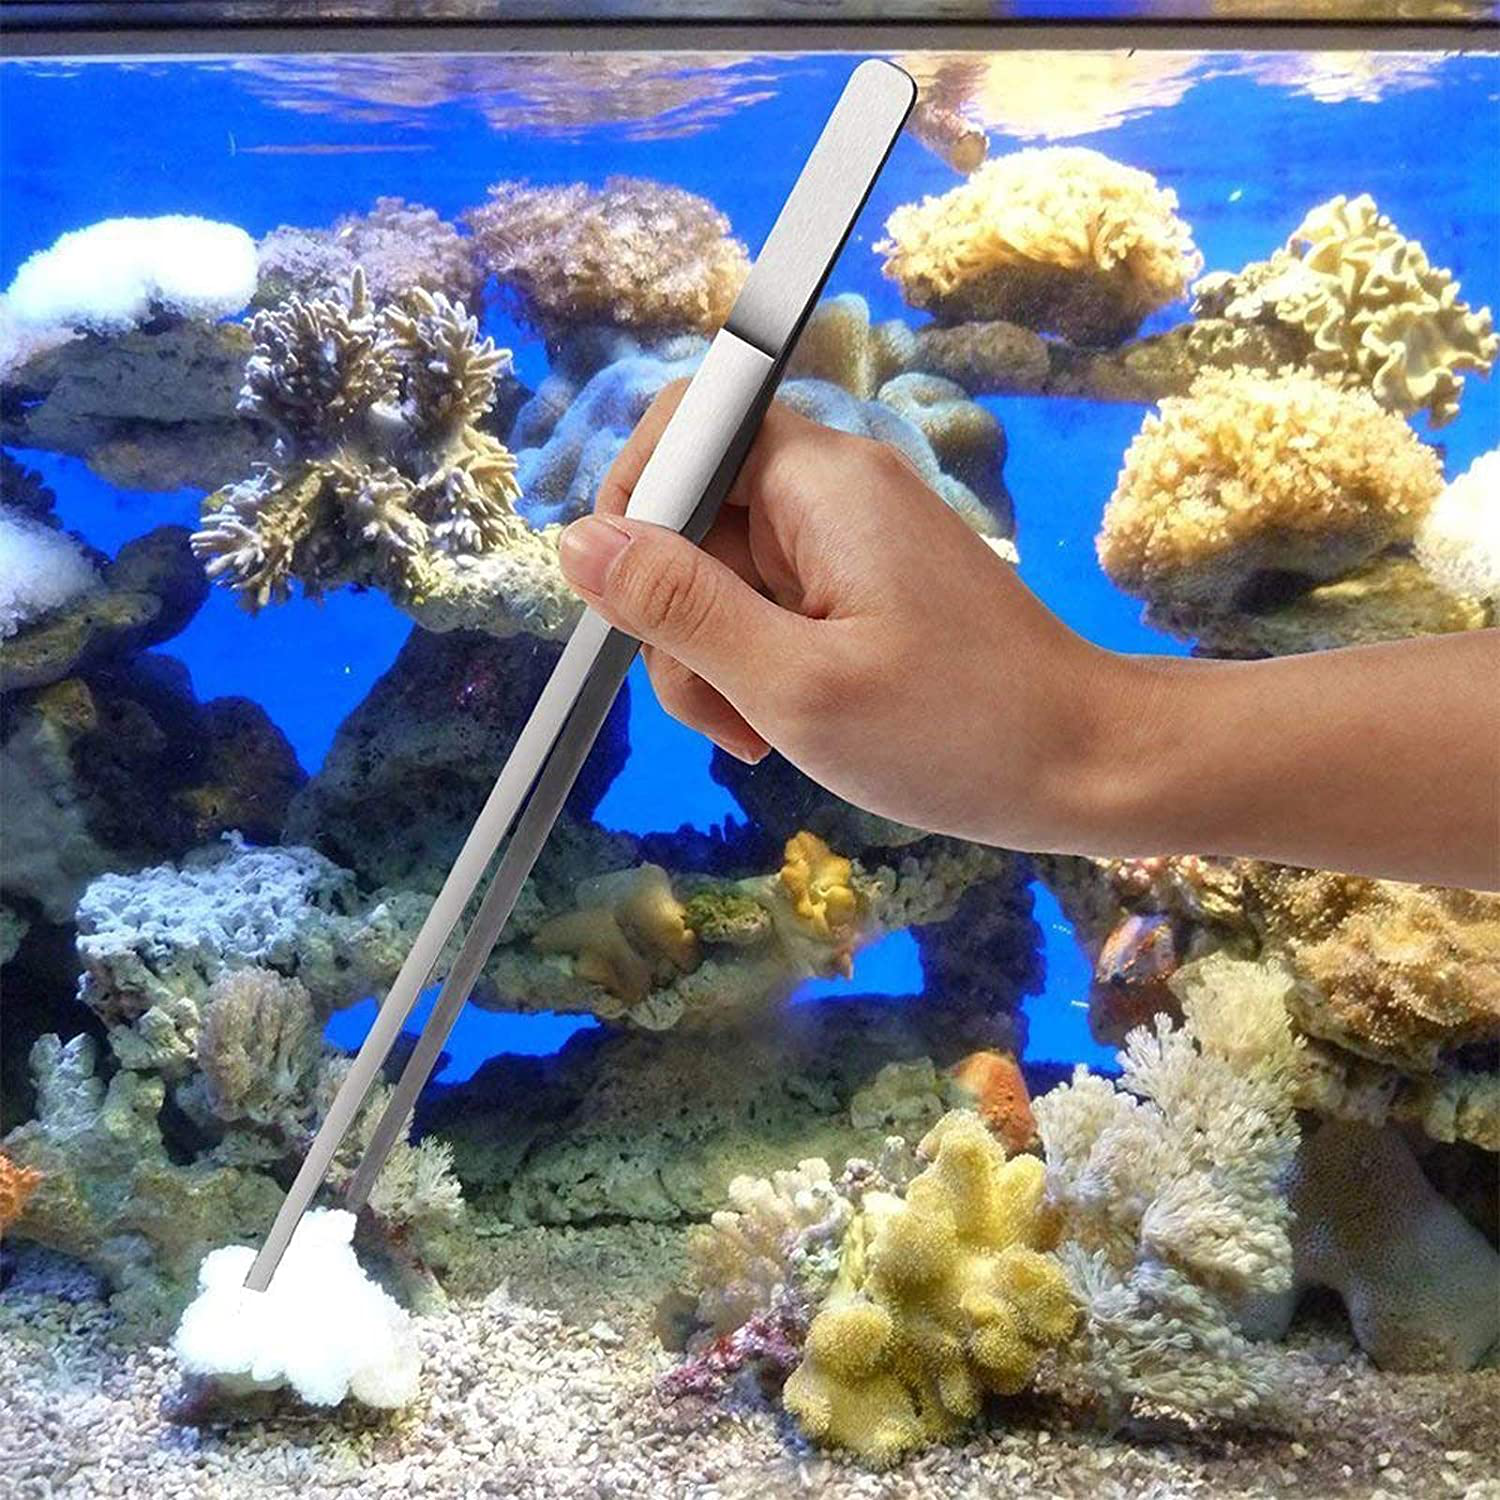 Fistoy Aquarium Scissor Tweezers Spatula Tool - 4 in 1 Stainless Steel Aquatic Plants Aquascaping Tools Set for Fish Starter Kits & Aquariums Tank